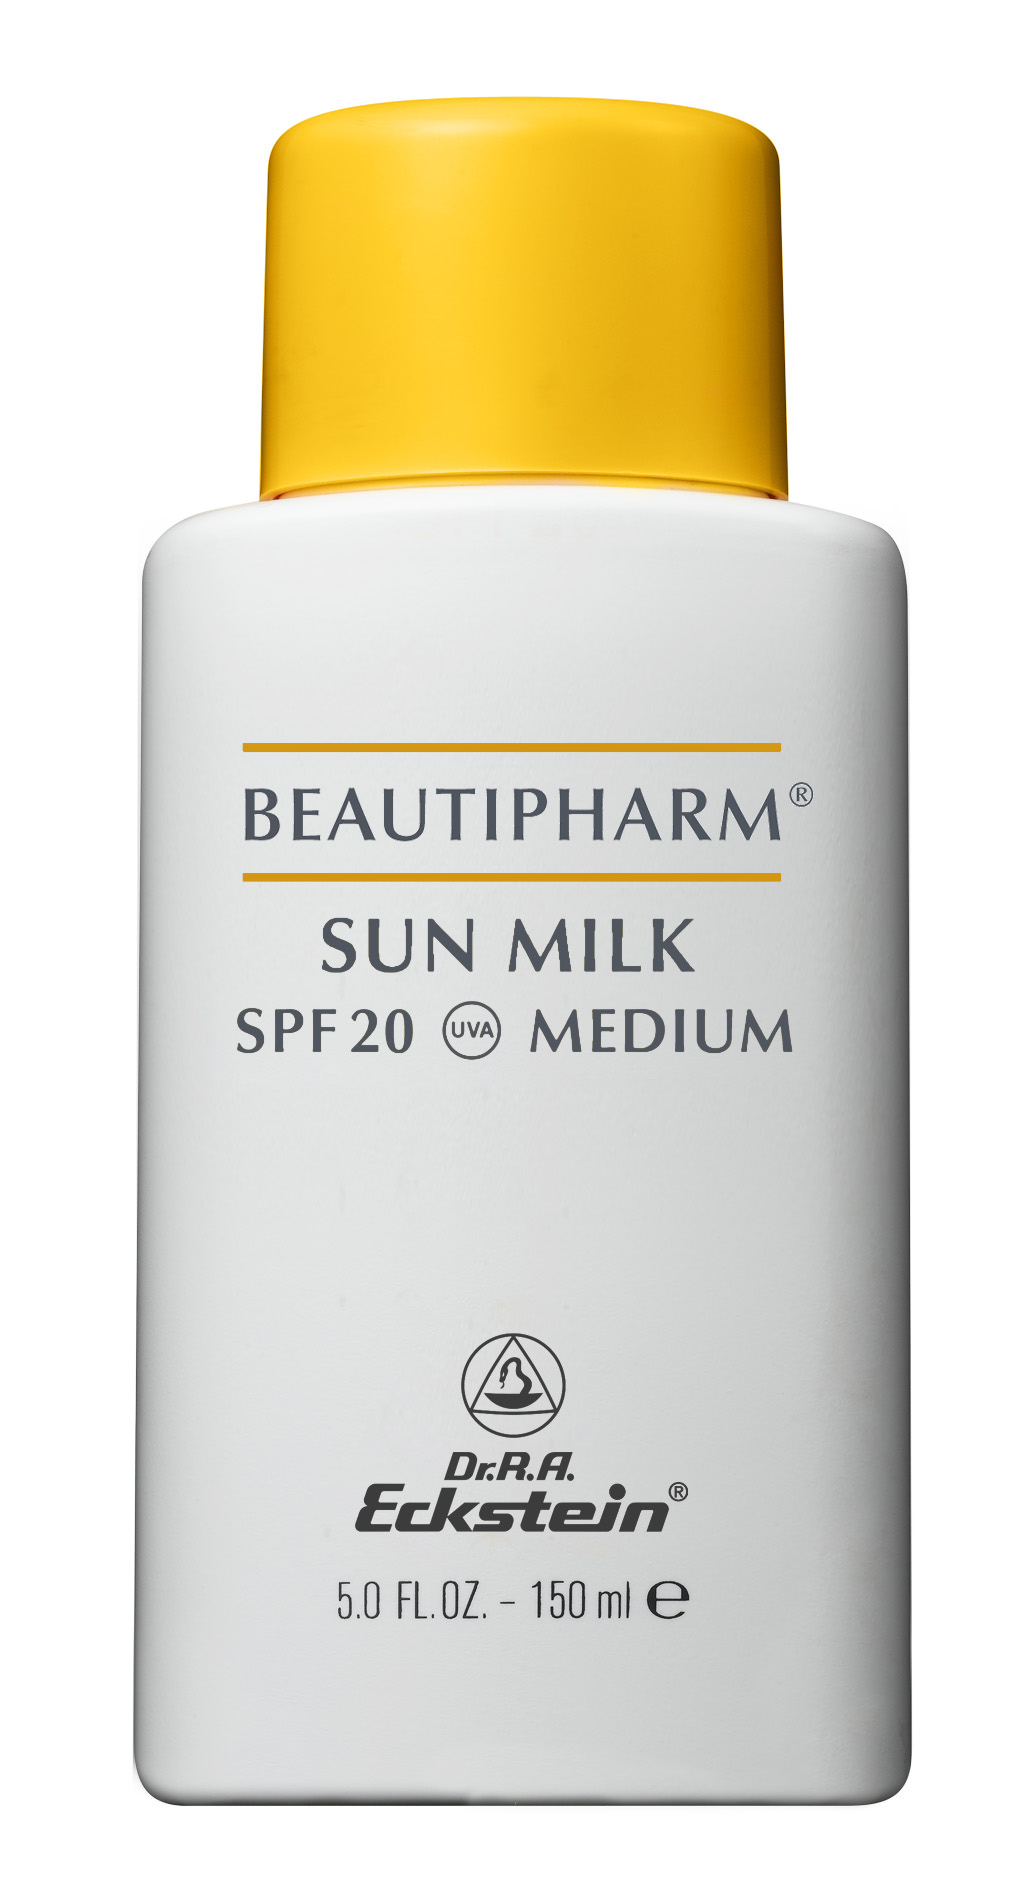 Doctor Eckstein Beautipharm® Sun Milk SPF 20 Medium